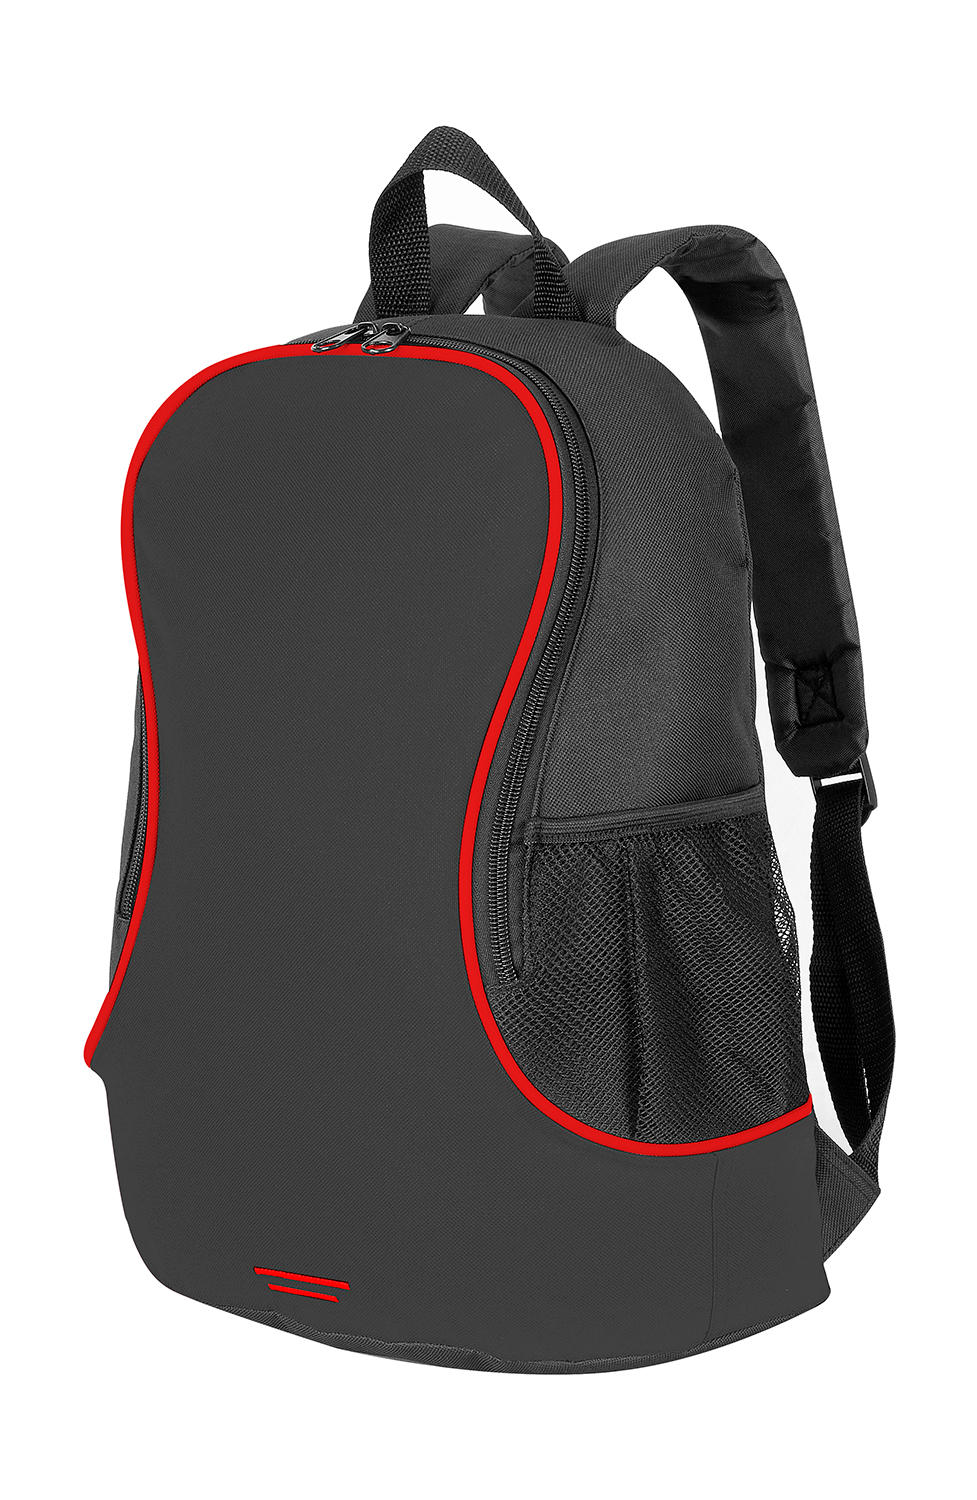  Fuji Basic Backpack in Farbe Black/Red